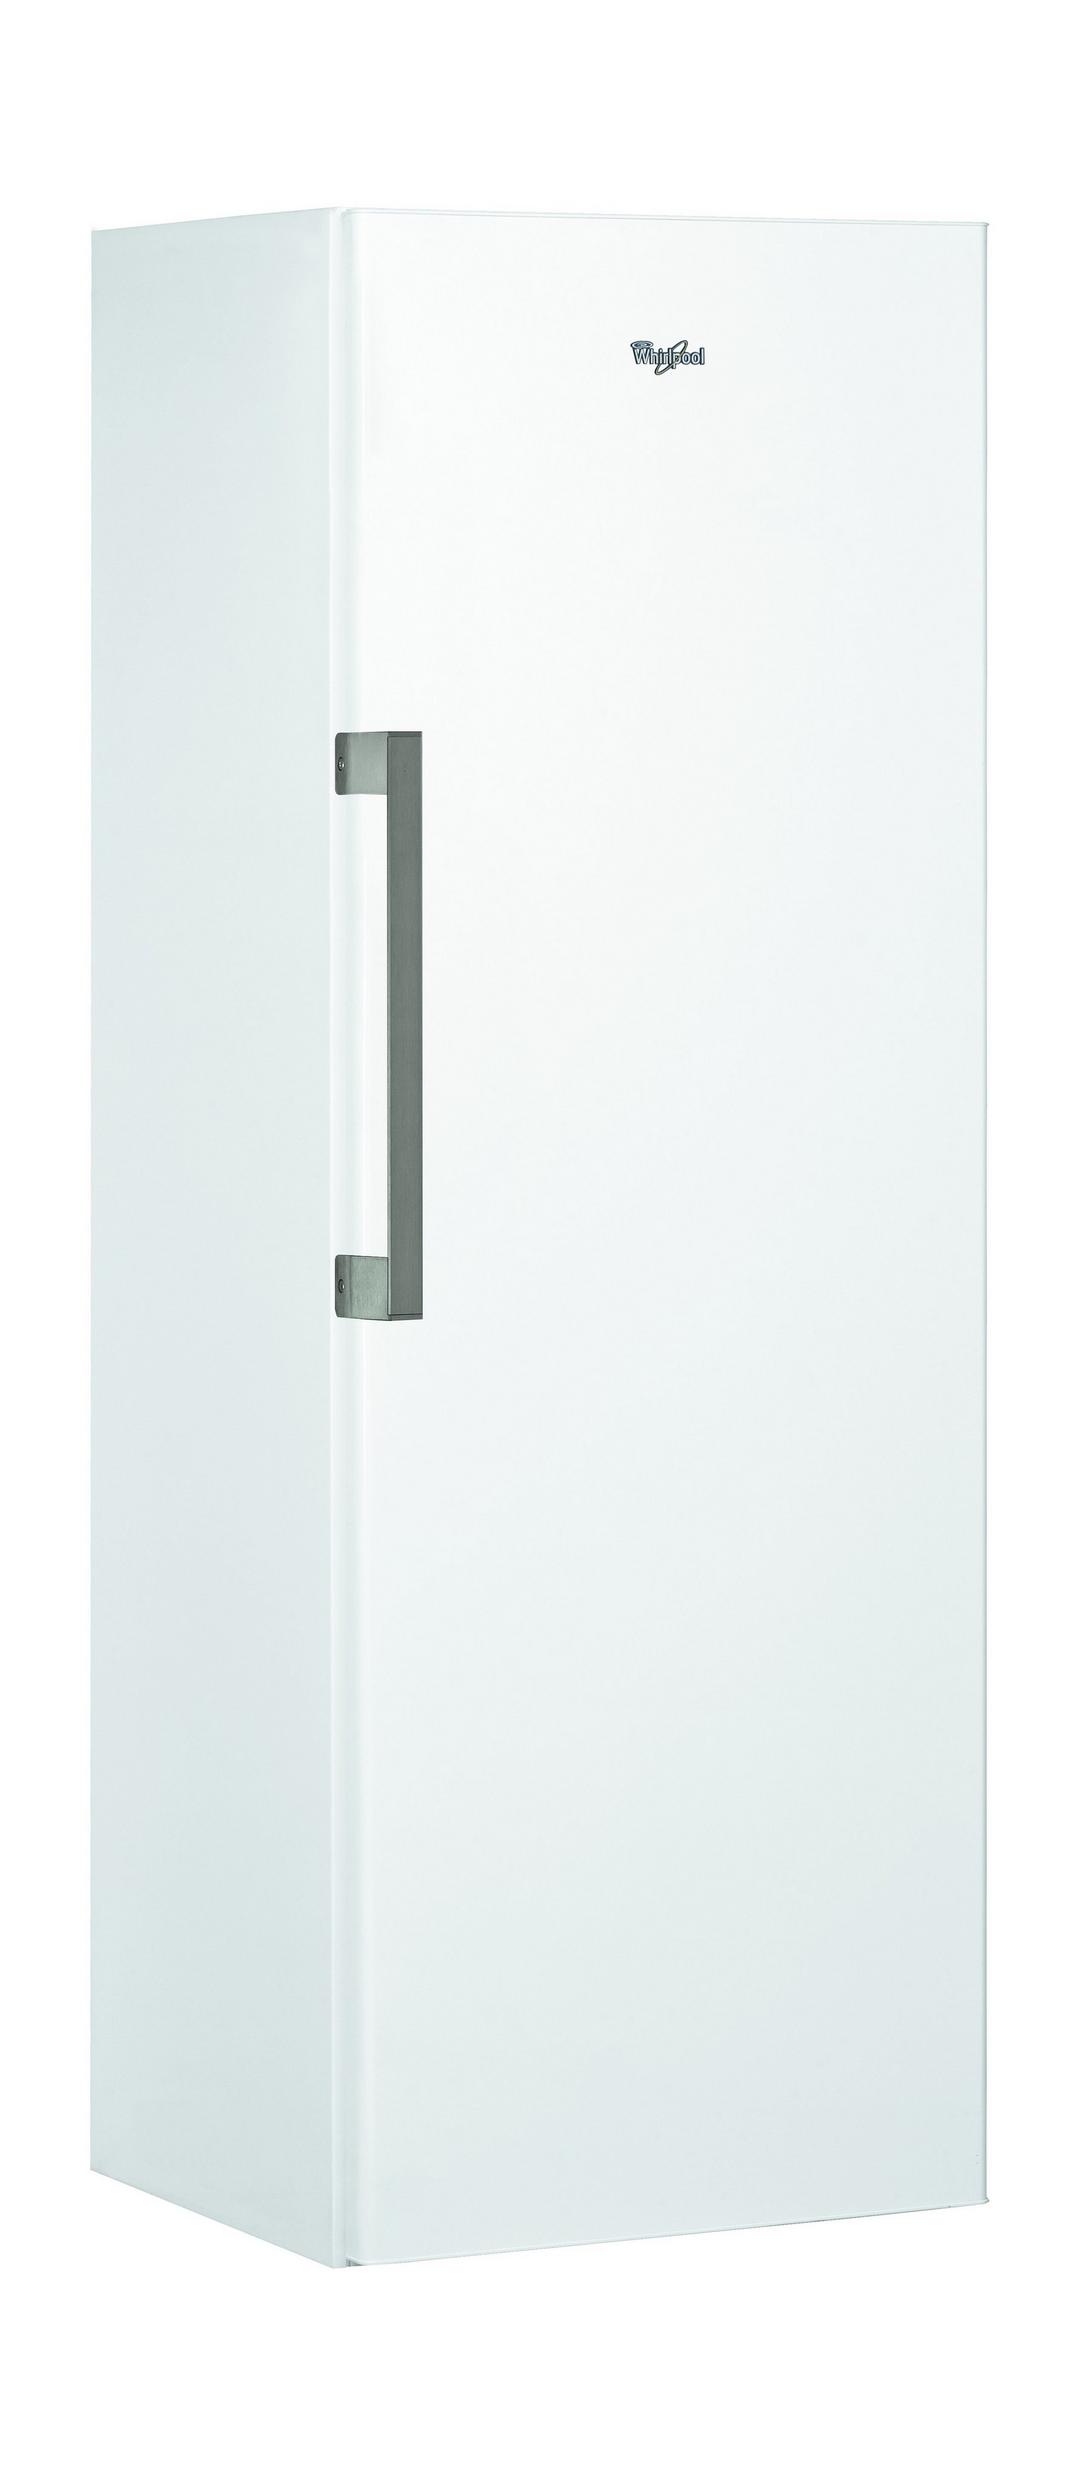 Whirlpool 10 Cft Single Door Upright Freezer (UW8 F2C WBI EX) – White